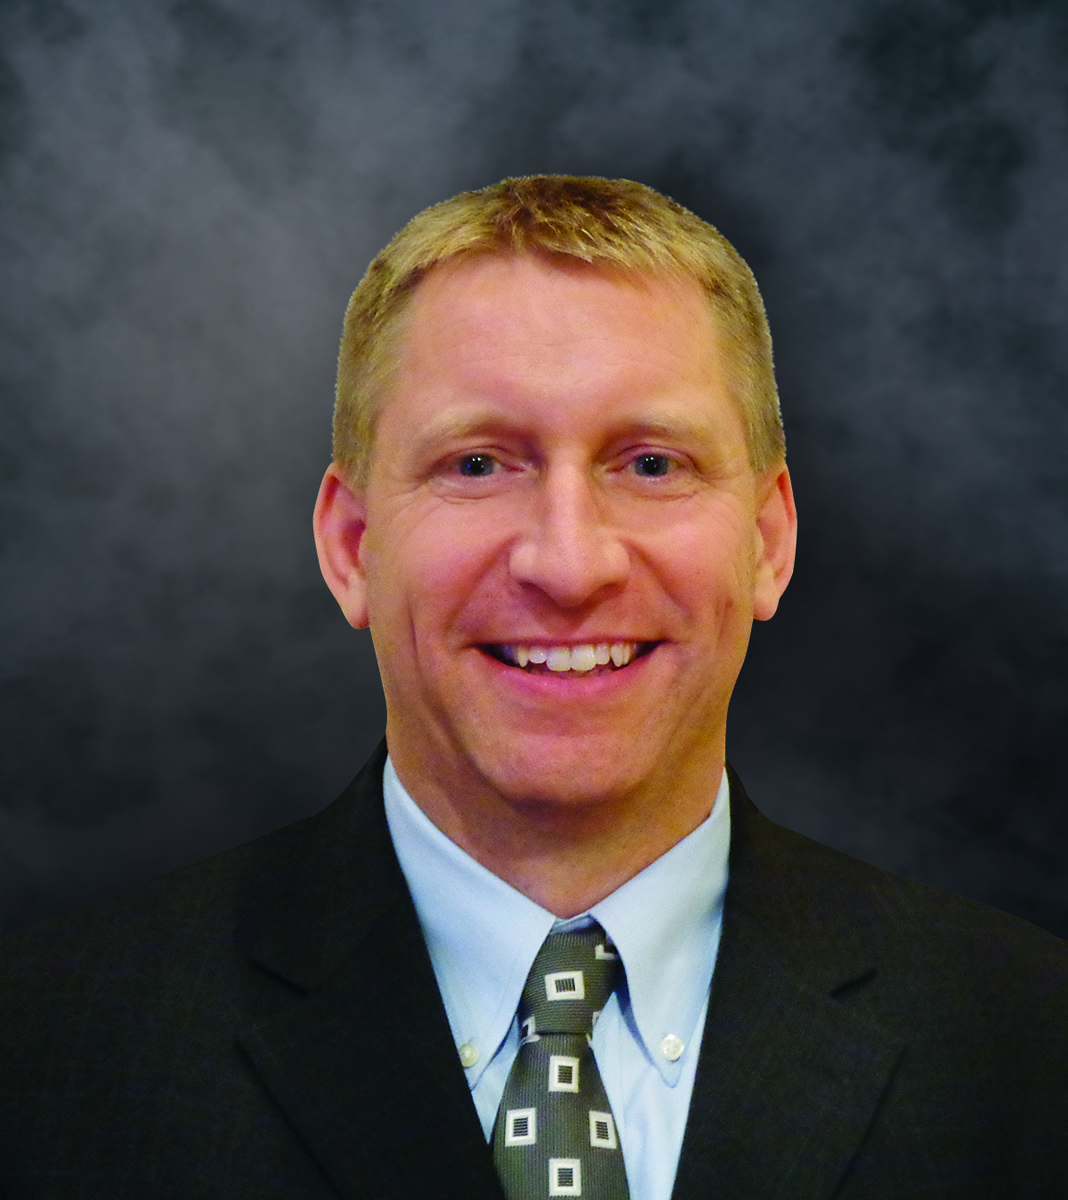 Scott Nichols, promoted to Vice President of Hayward Baker’s Northeast Region.